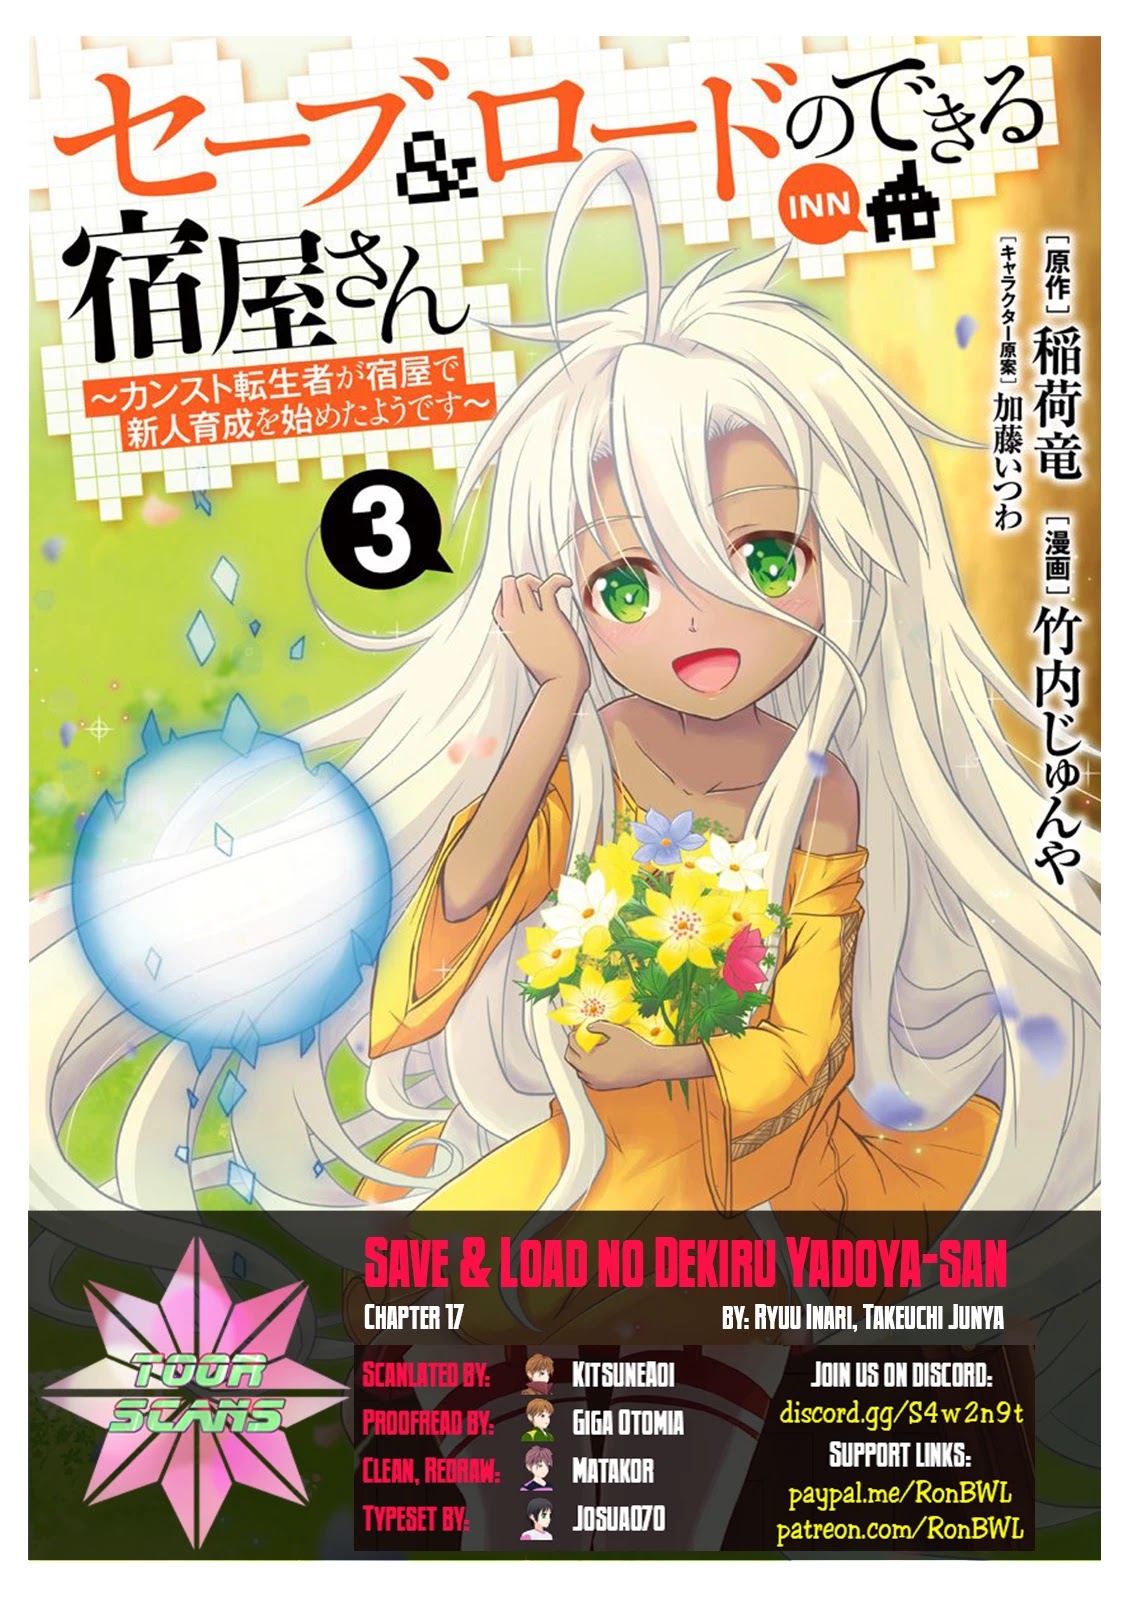 Save & Load No Dekiru Yadoya-San Chapter 17 #1